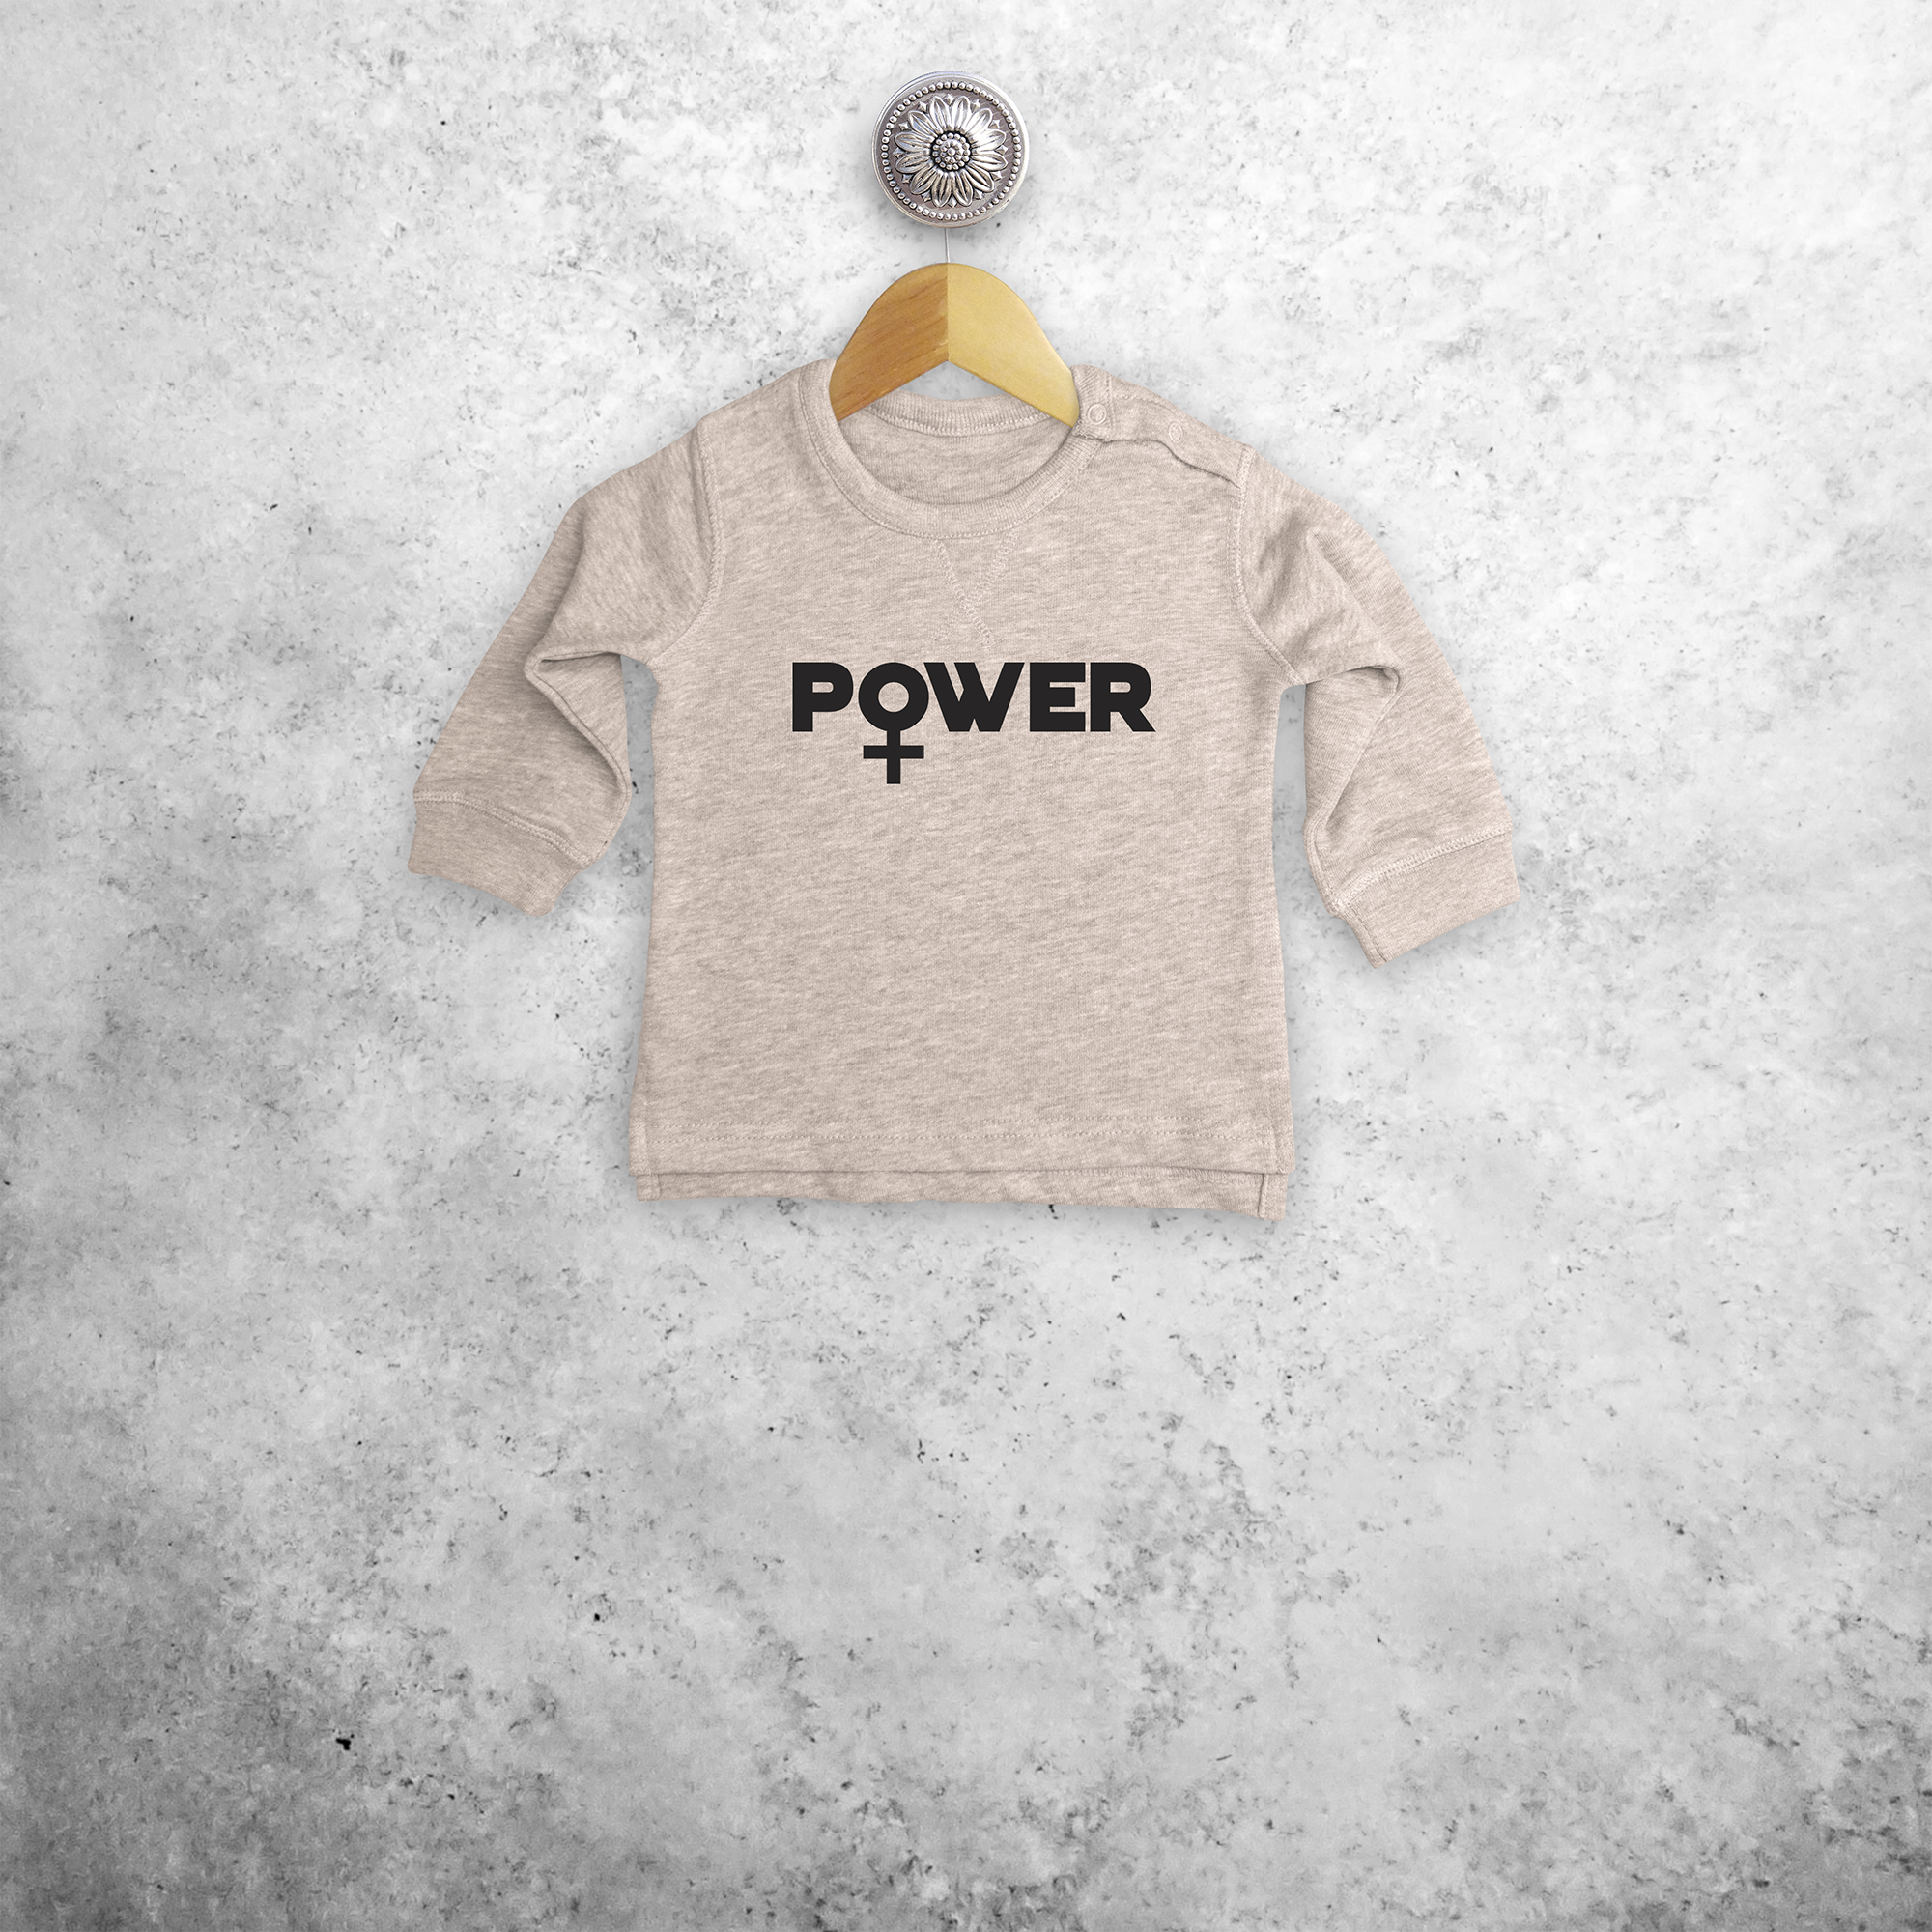 'Power' baby sweater